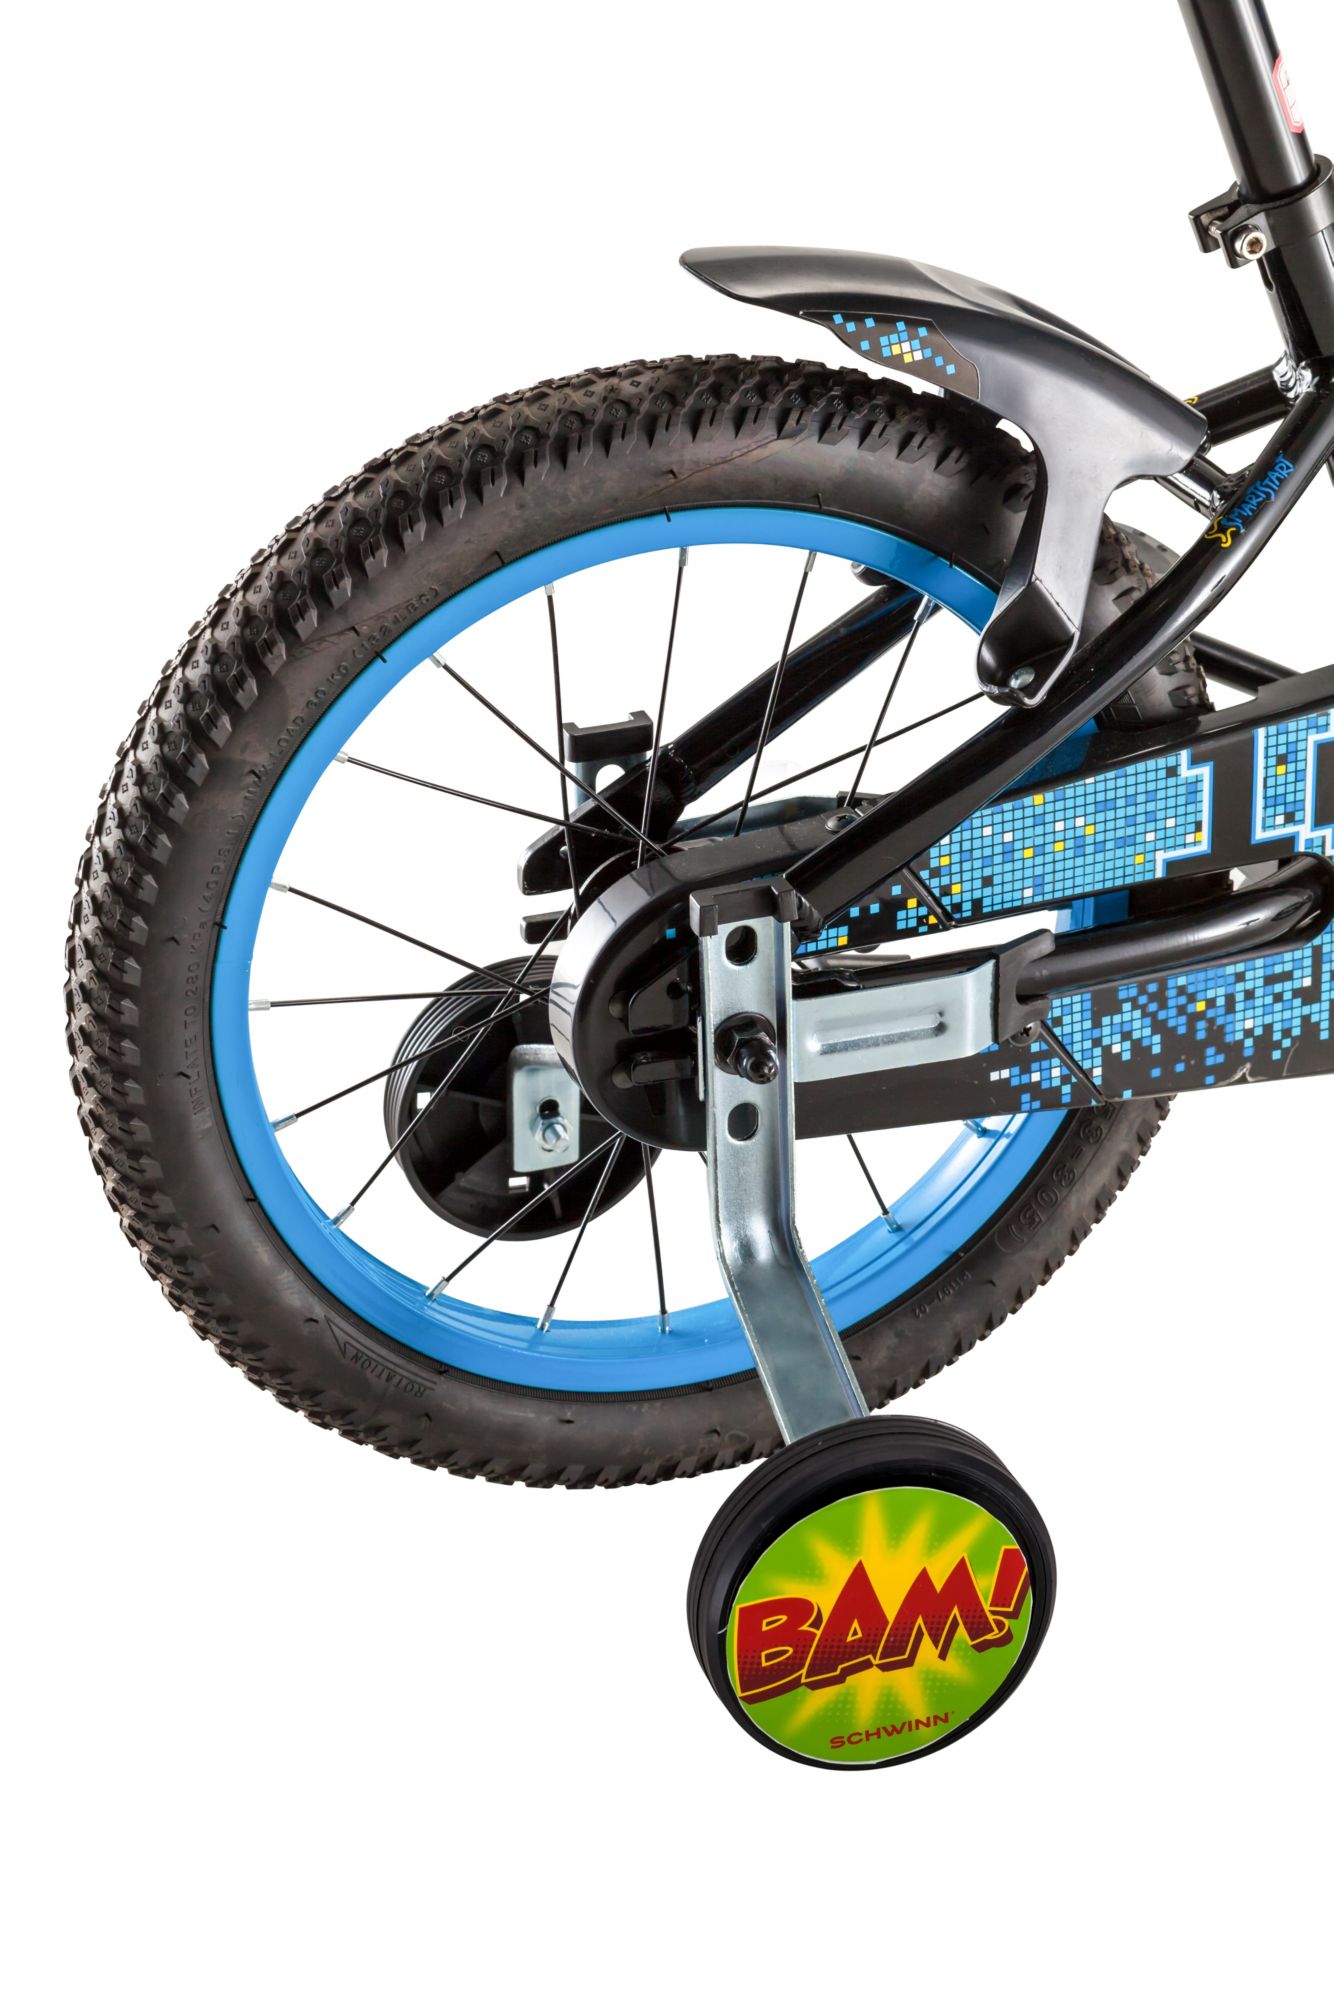 schwinn signature adjustable bike training wheels